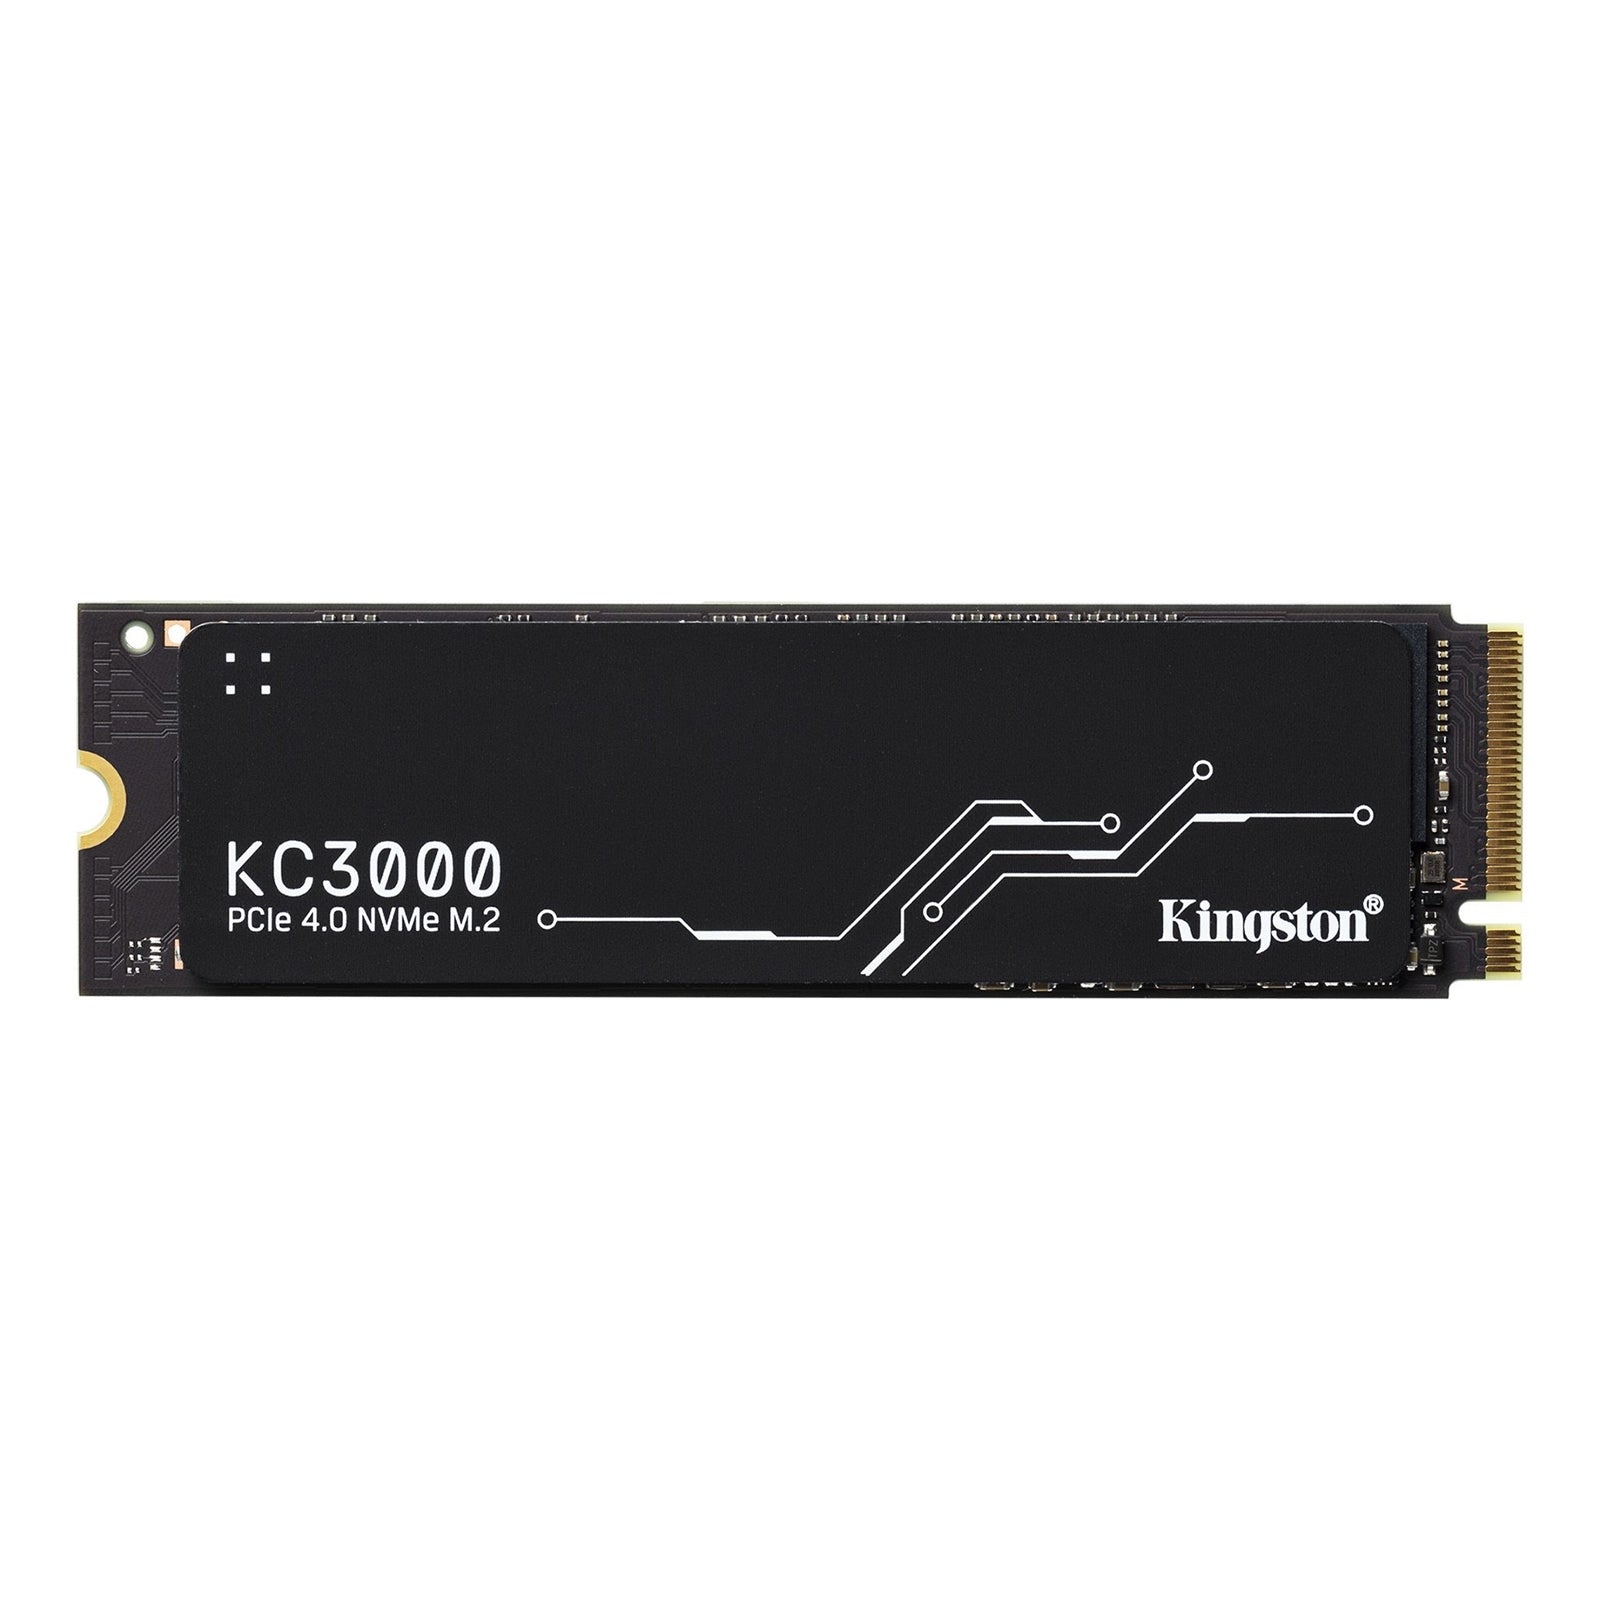 Kingston KC3000 512GB NVMe M.2 PCIe Gen4 High-Speed SSD